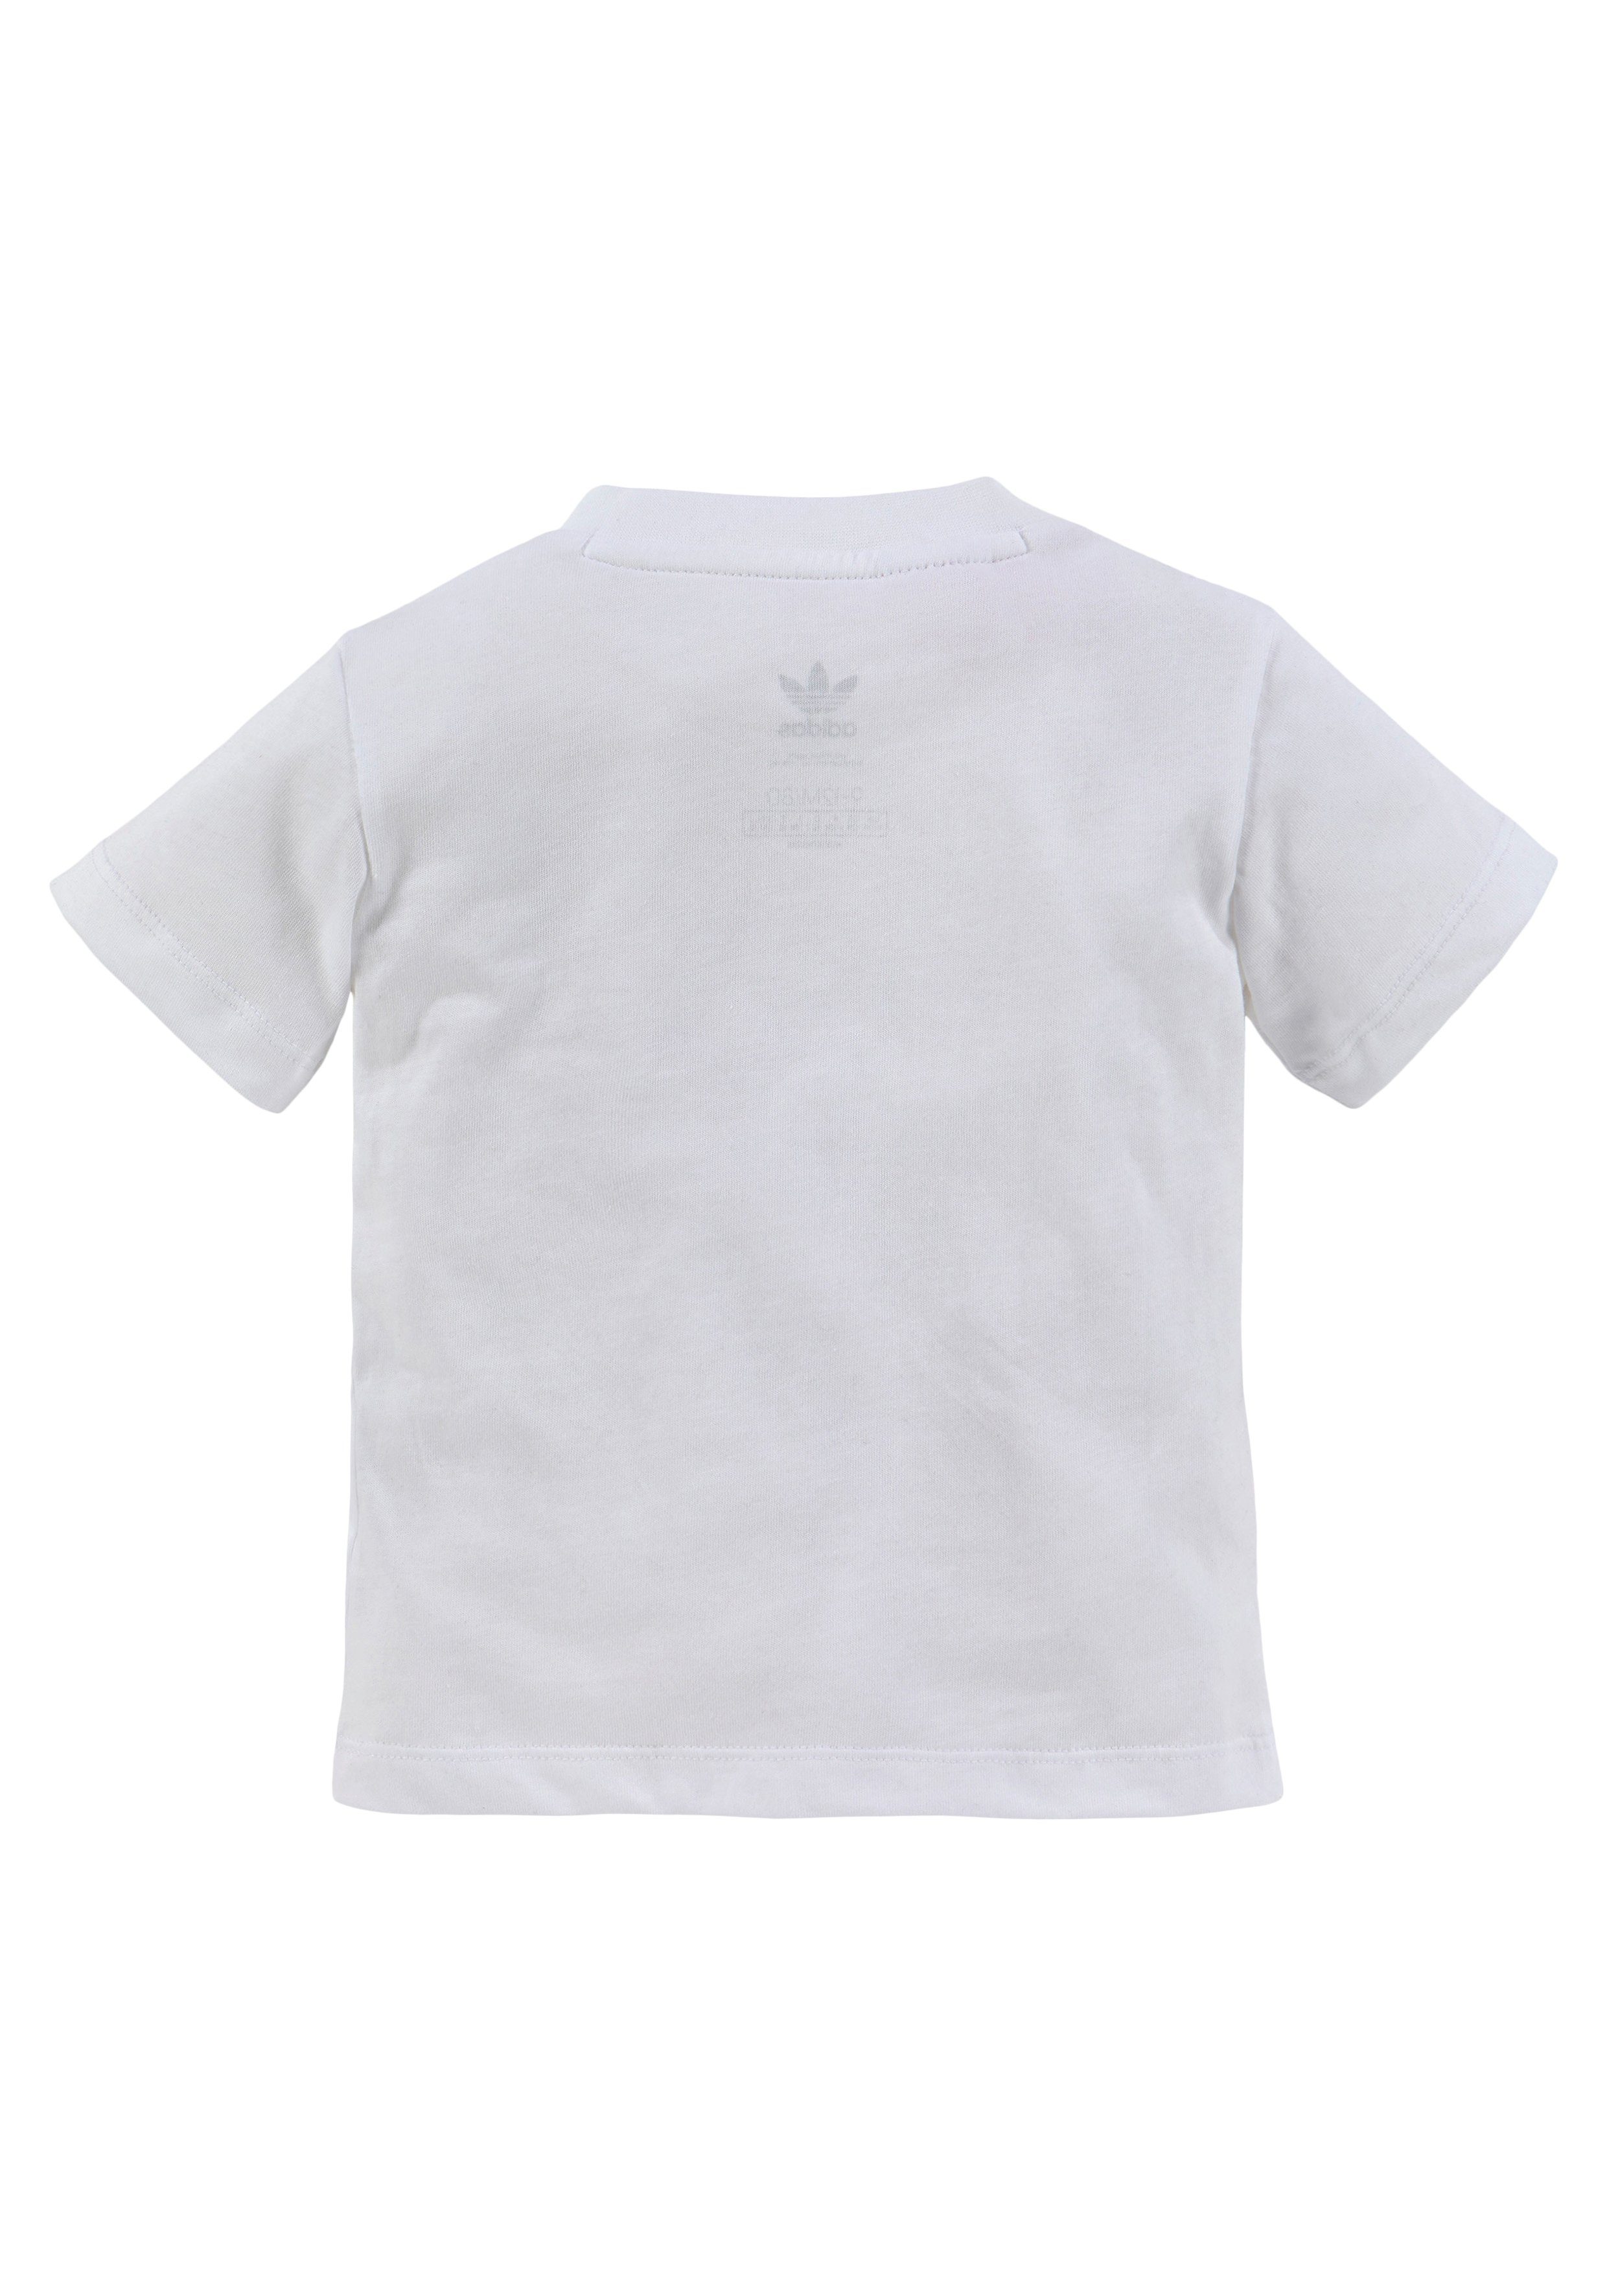 / T-Shirt SET White Pink Originals TREFOIL & Shorts adidas SHORTS Bliss UND (Set)